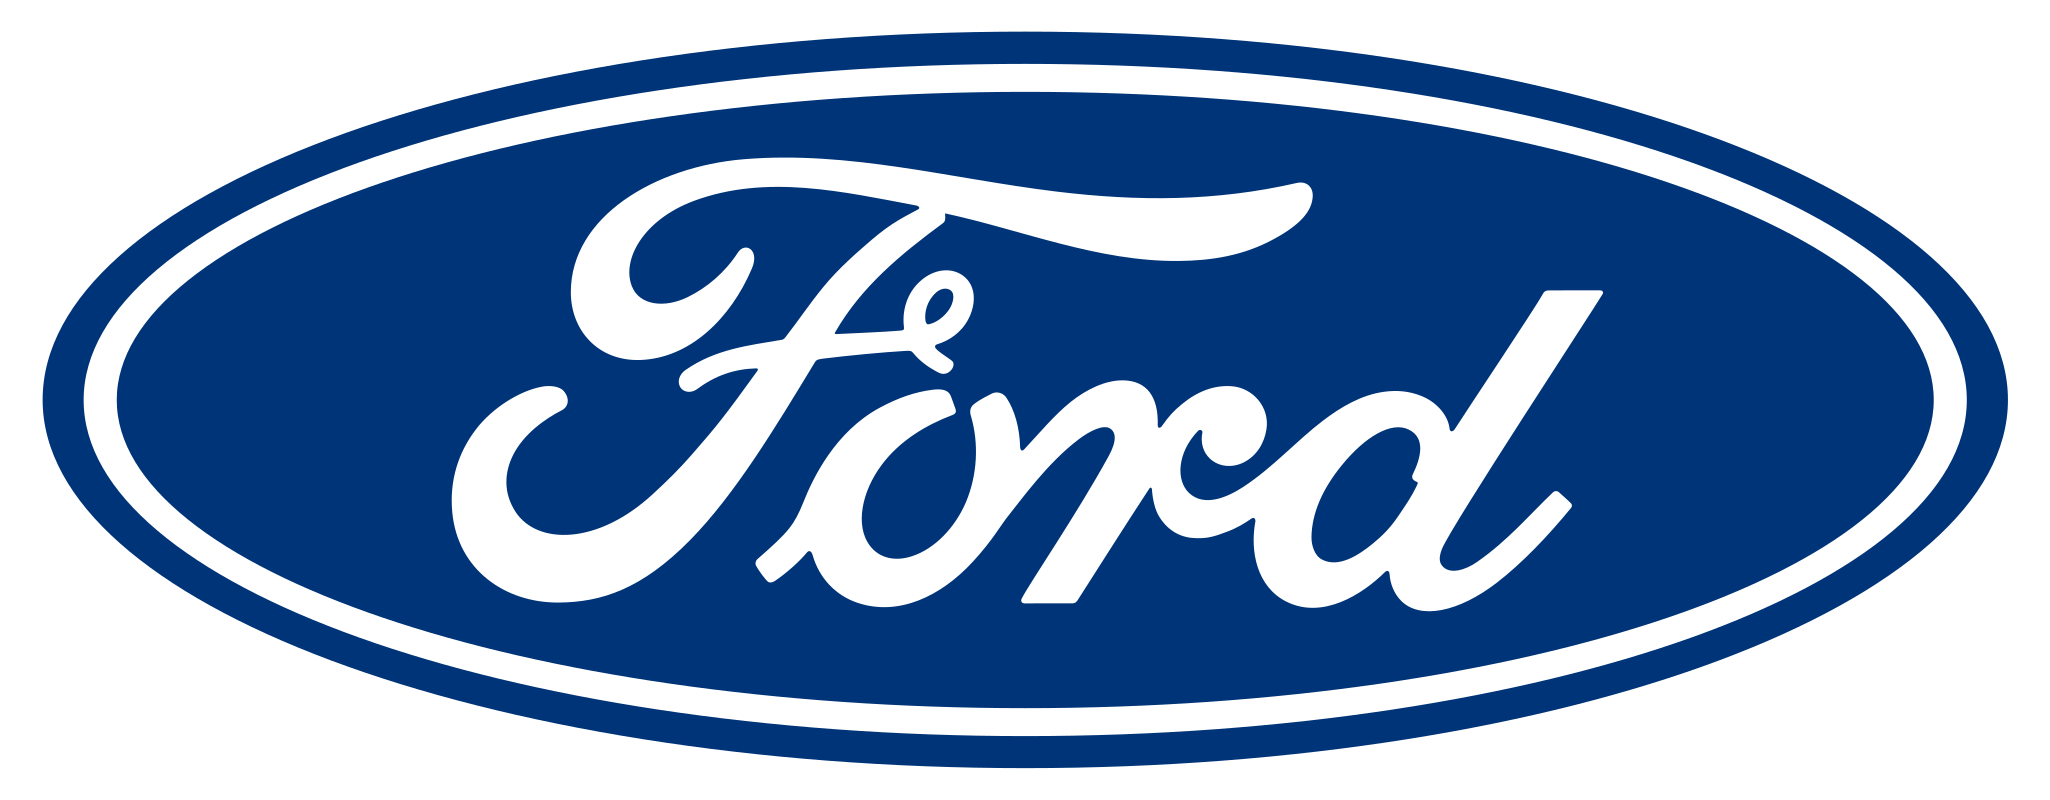 Cars Logo Brands Transparent Background